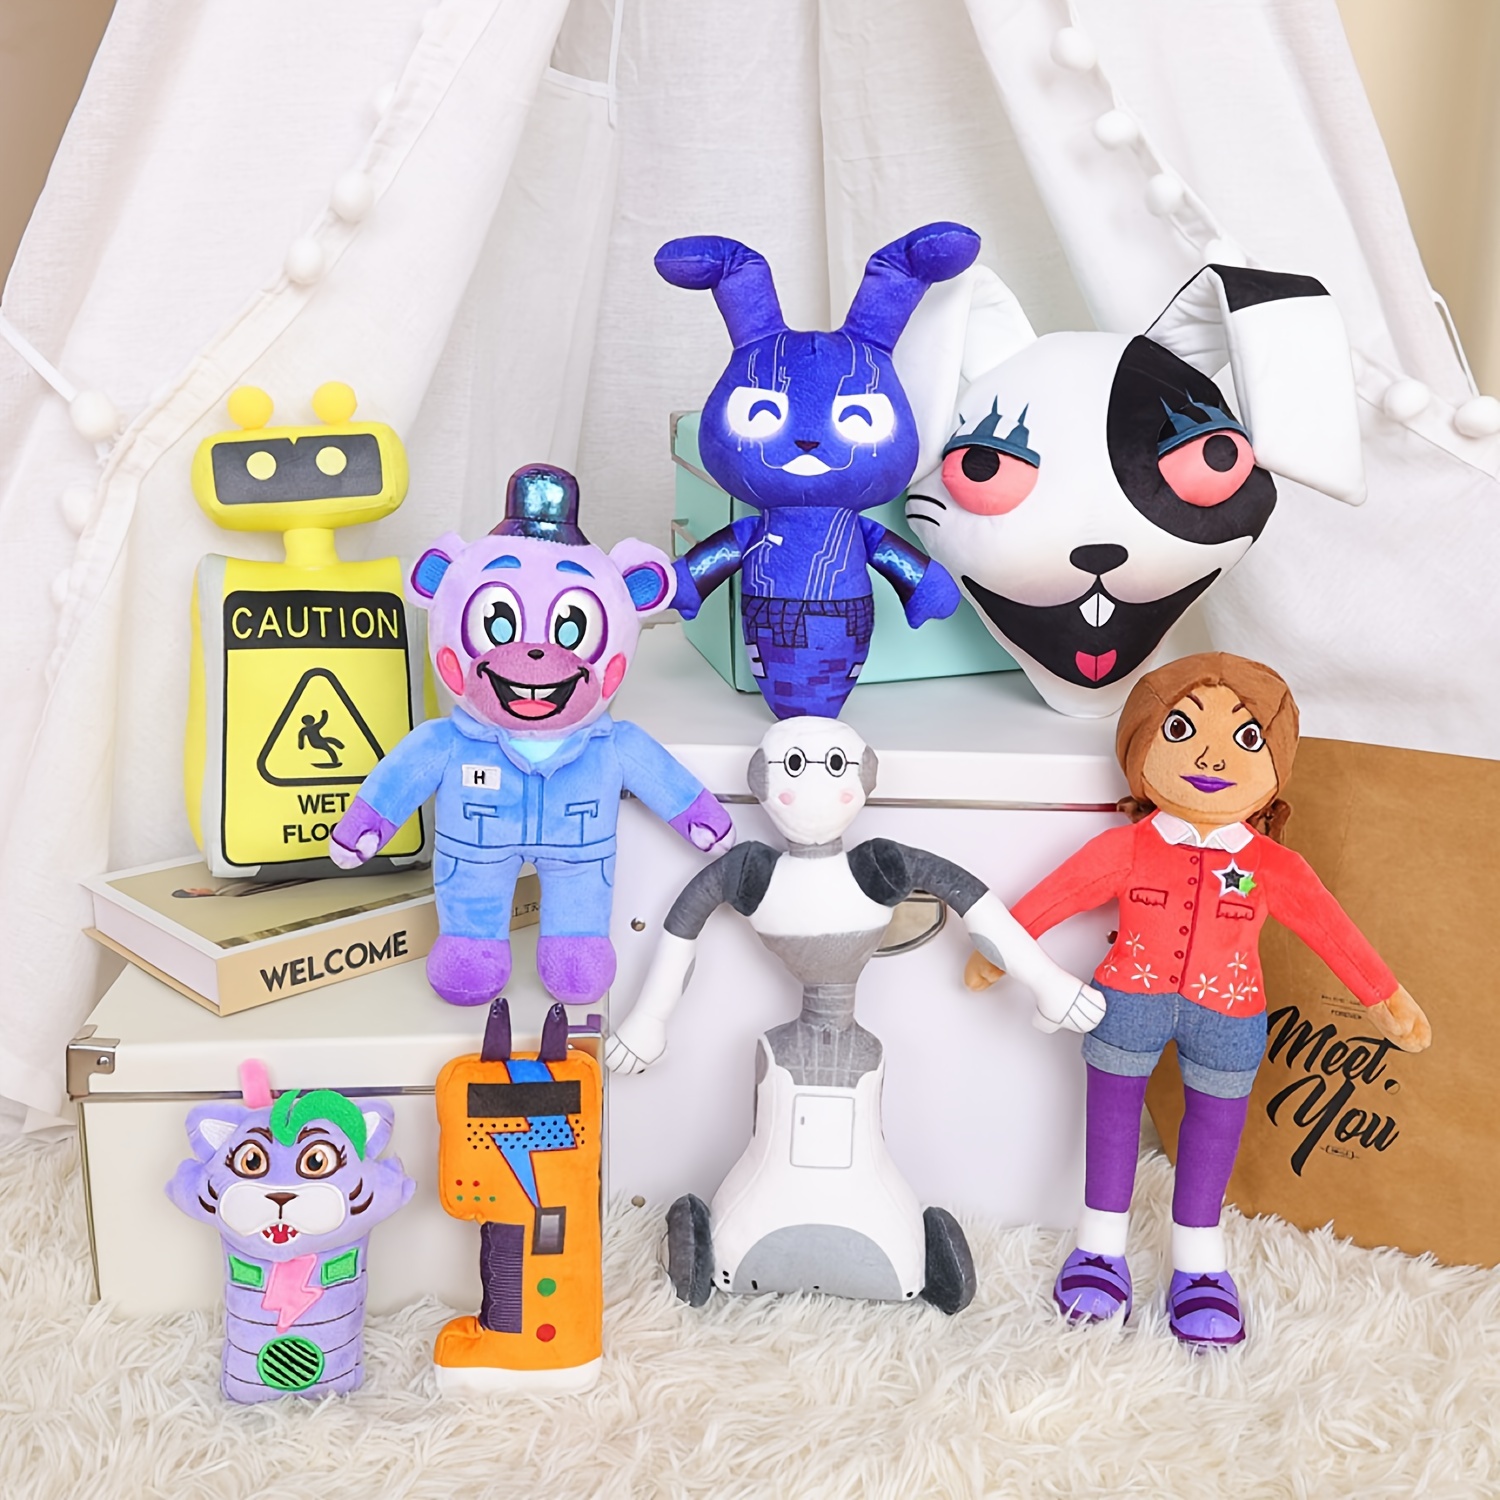  FNAF Plush, Nightmare Bonnie, Puppet, FNAF Plush, Sly Plush -  Plush Toys - FNAF, Nightmare Plush, All Character Plush Gifts (Bonnie Hand  Puppet) : Toys & Games